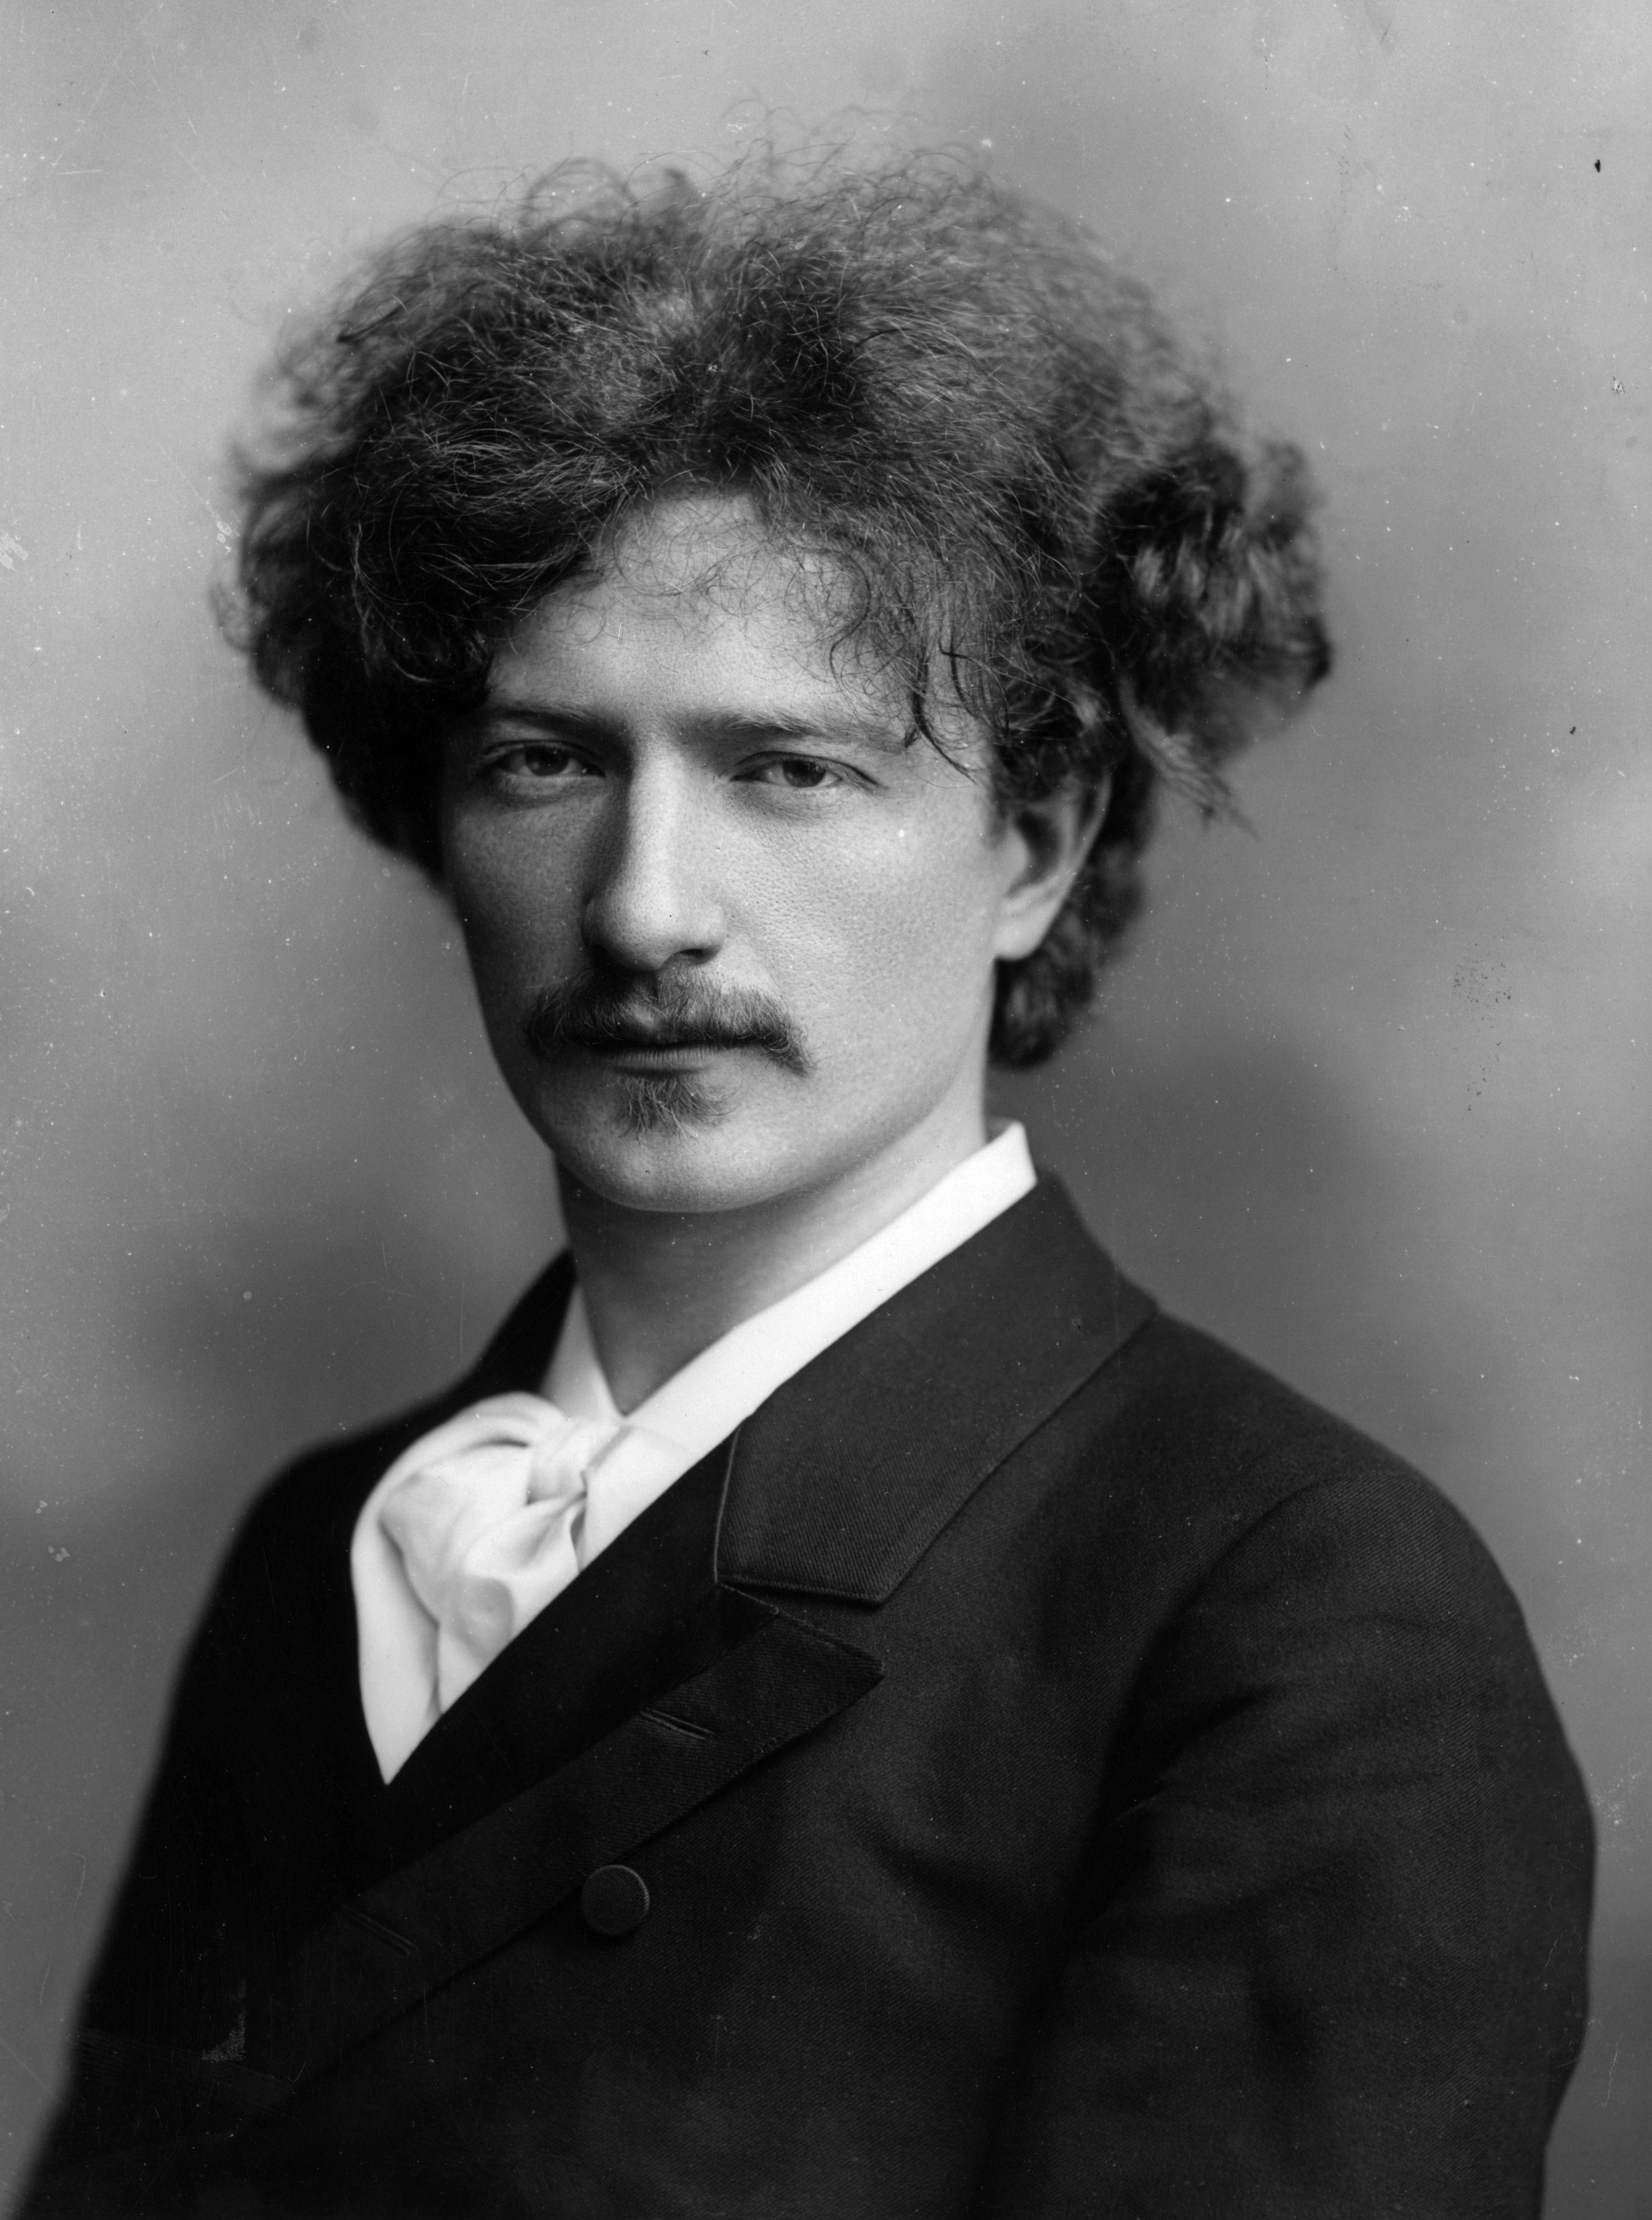 Ignace Paderewski et sa chevelure flamboyante en 1890. [London Stereoscopic Company/Getty Images]